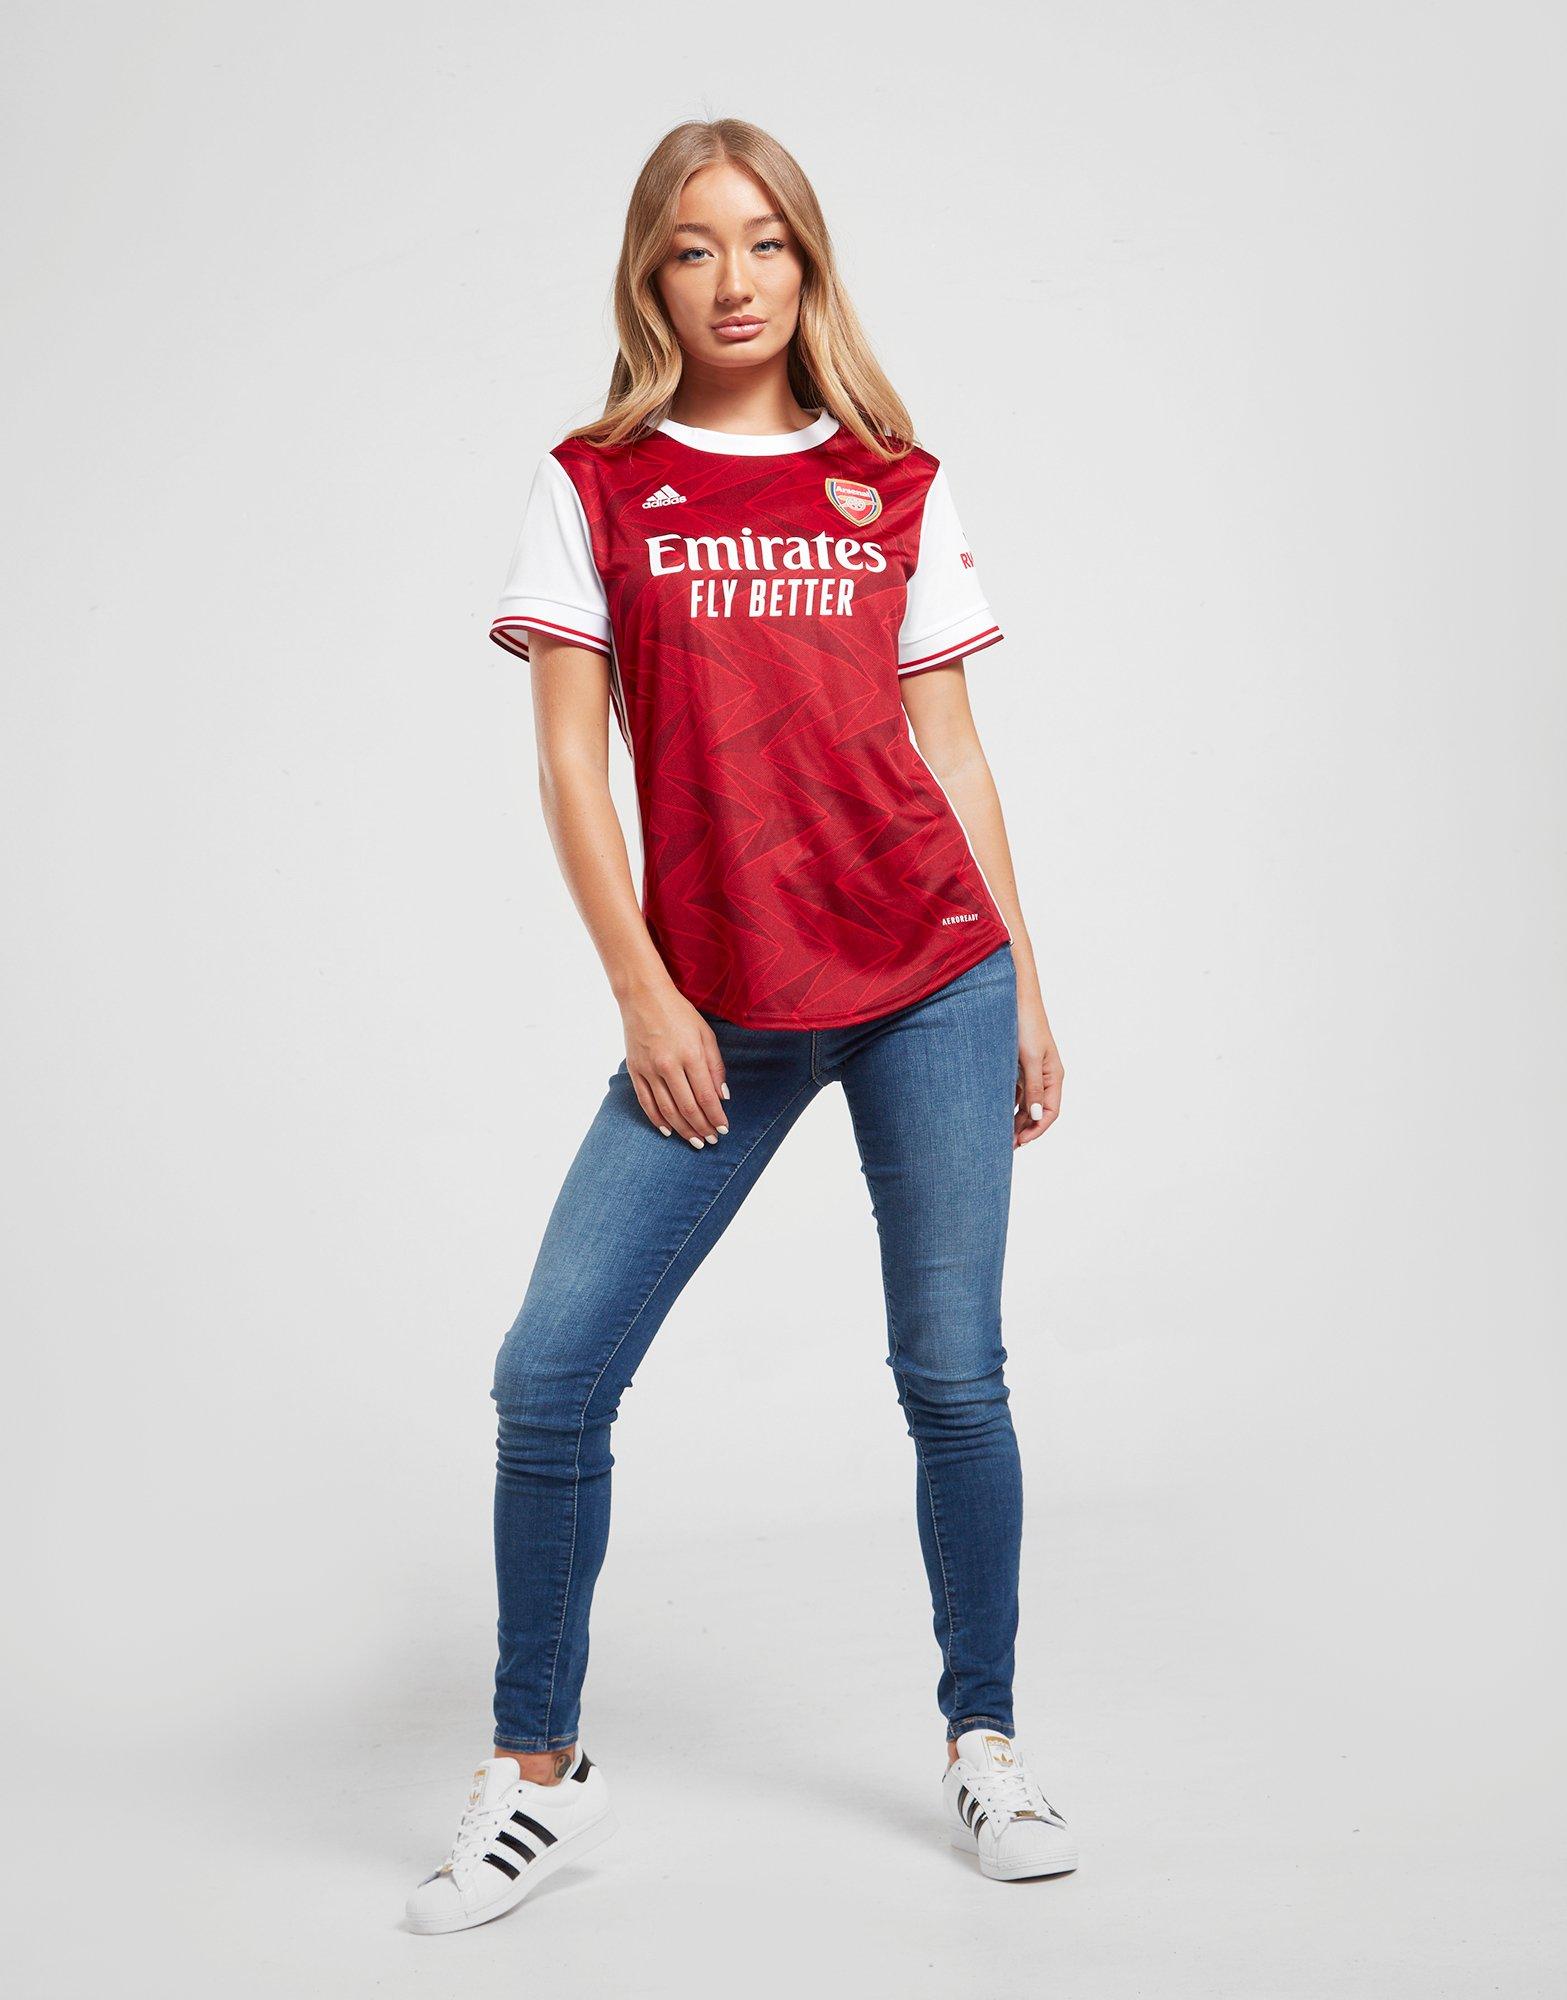 arsenal shirt womens